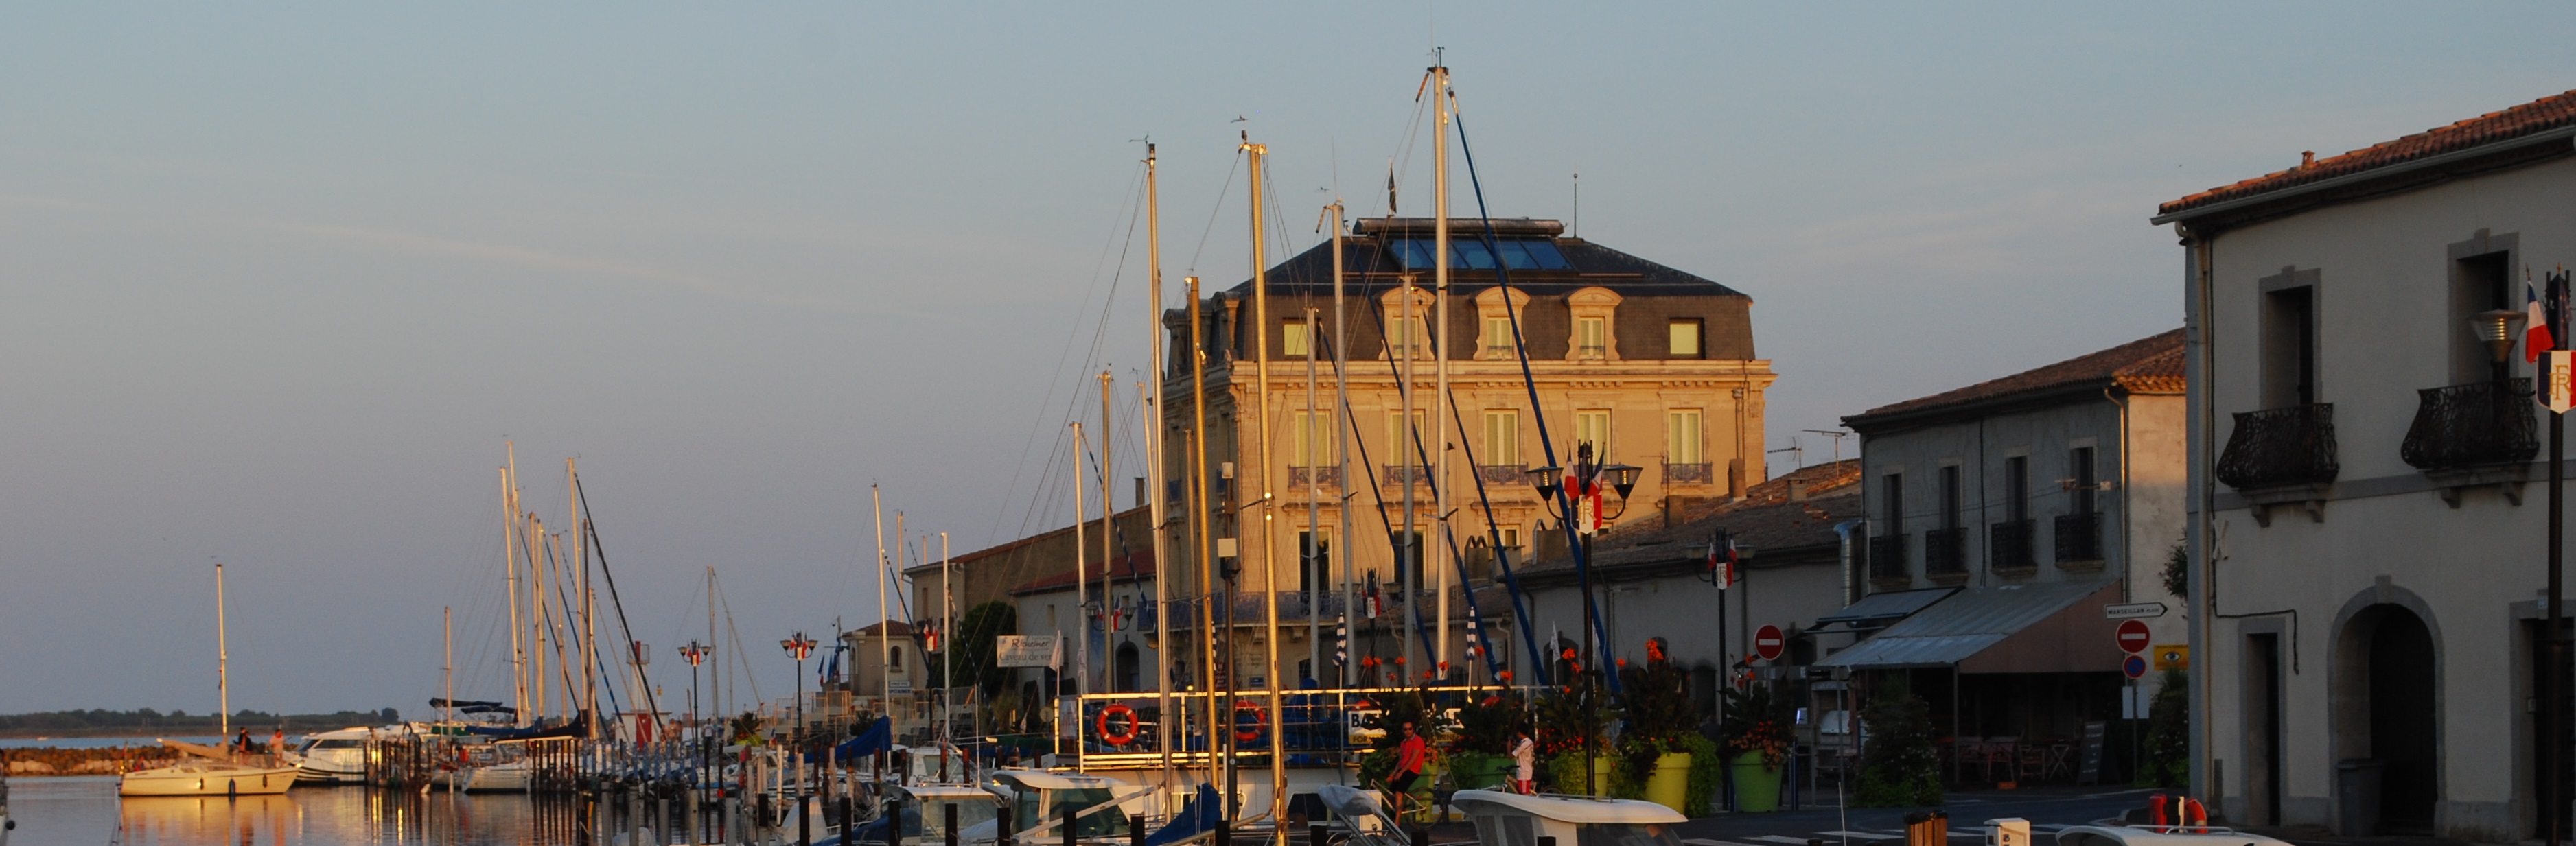 Photo of Marseillan Port